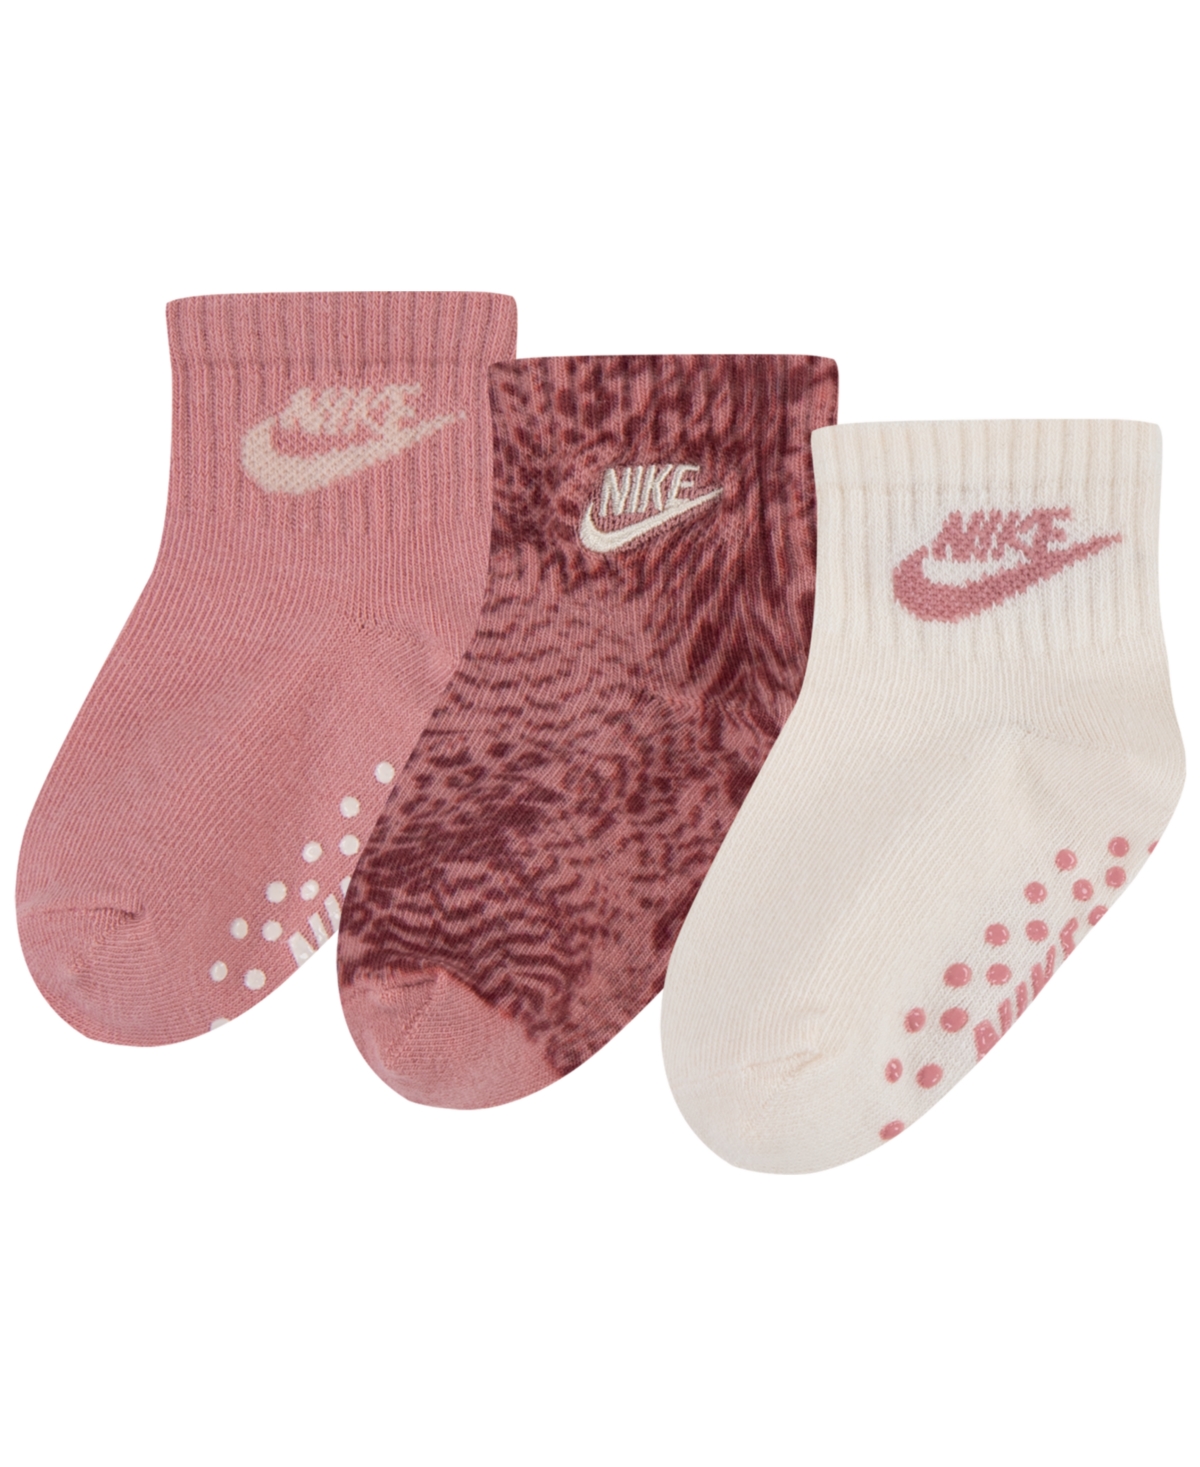 Nike Baby Girls Grip Socks, Pack Of 3 In Red Stardust